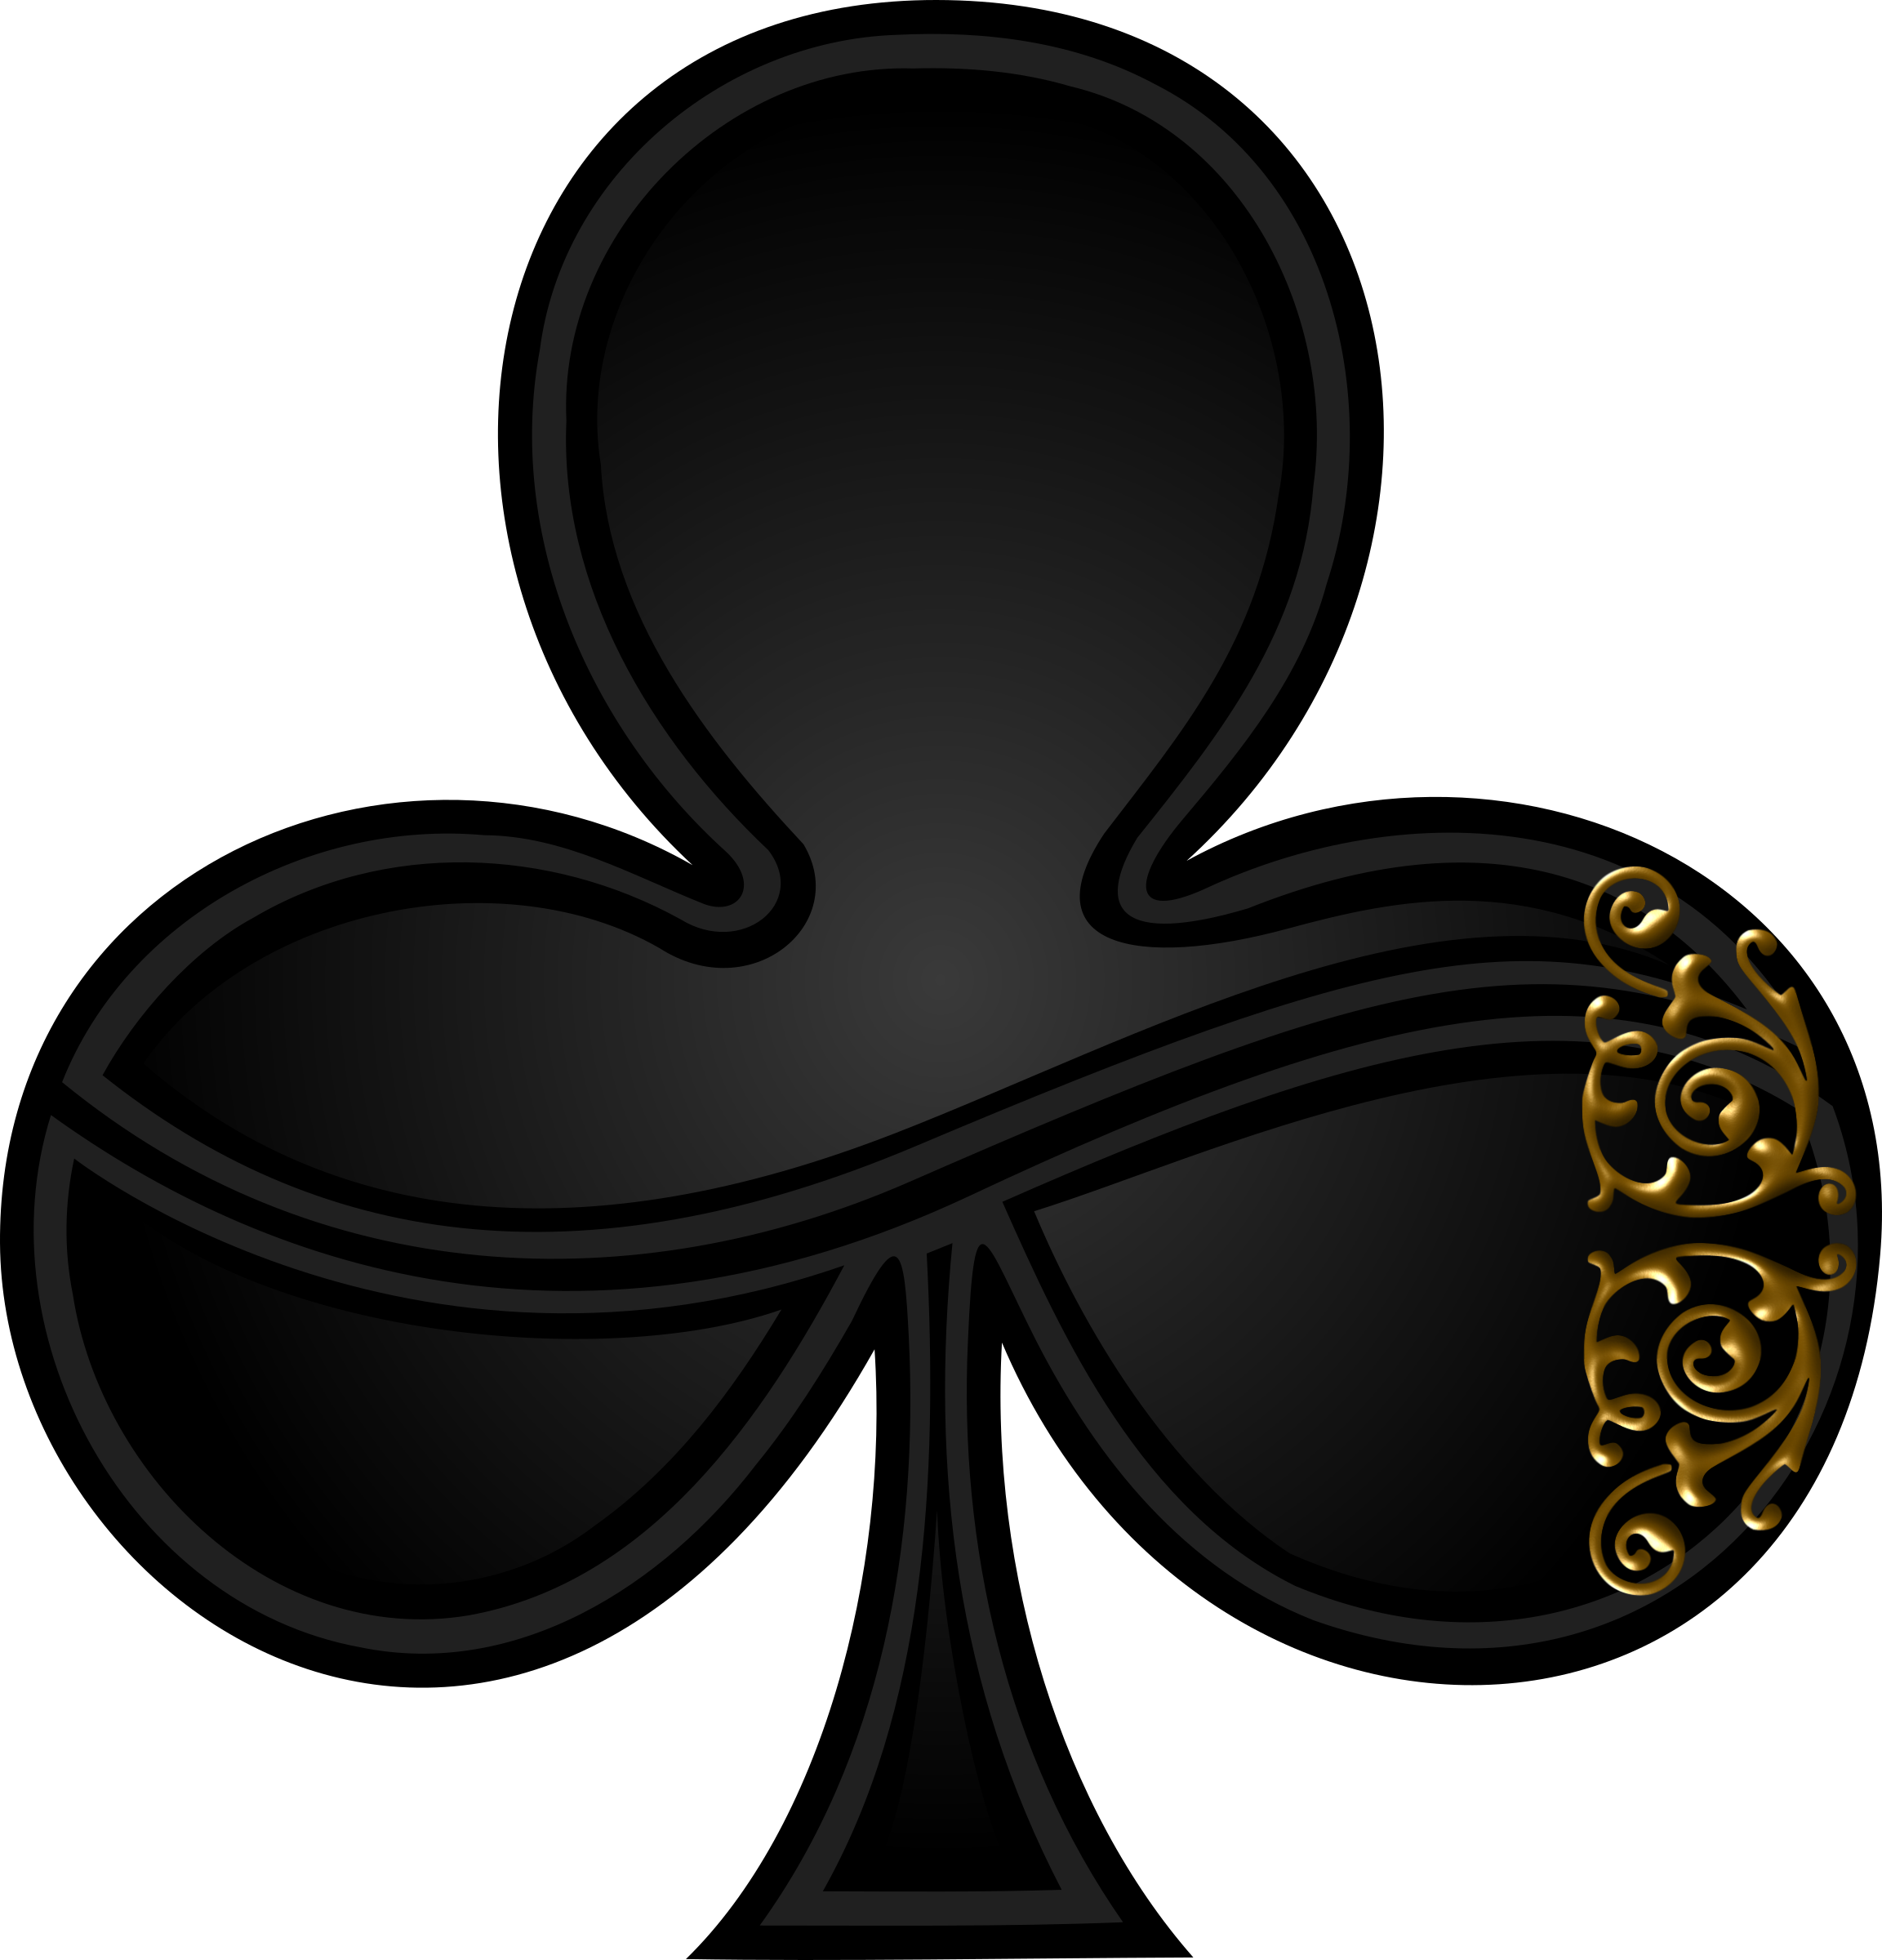 Clubs big image png. Poker clipart card symbol